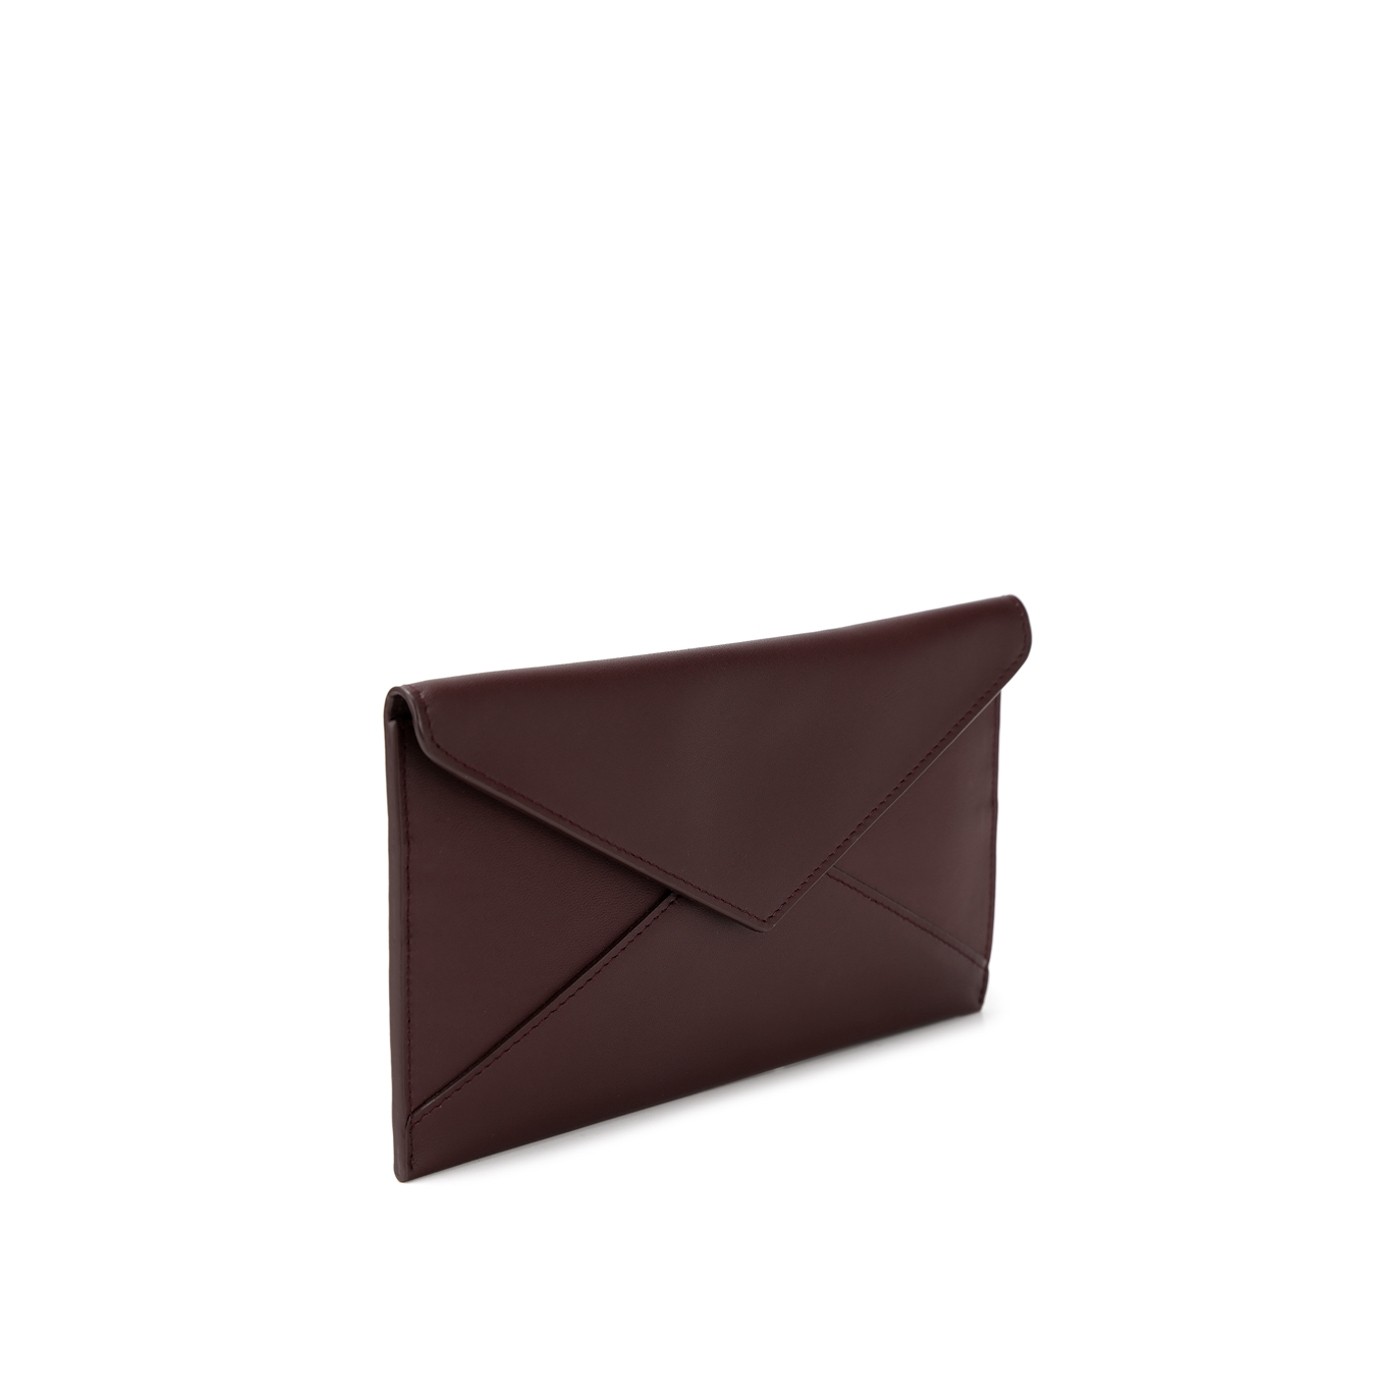 RABEANCO - Envelope Wallet